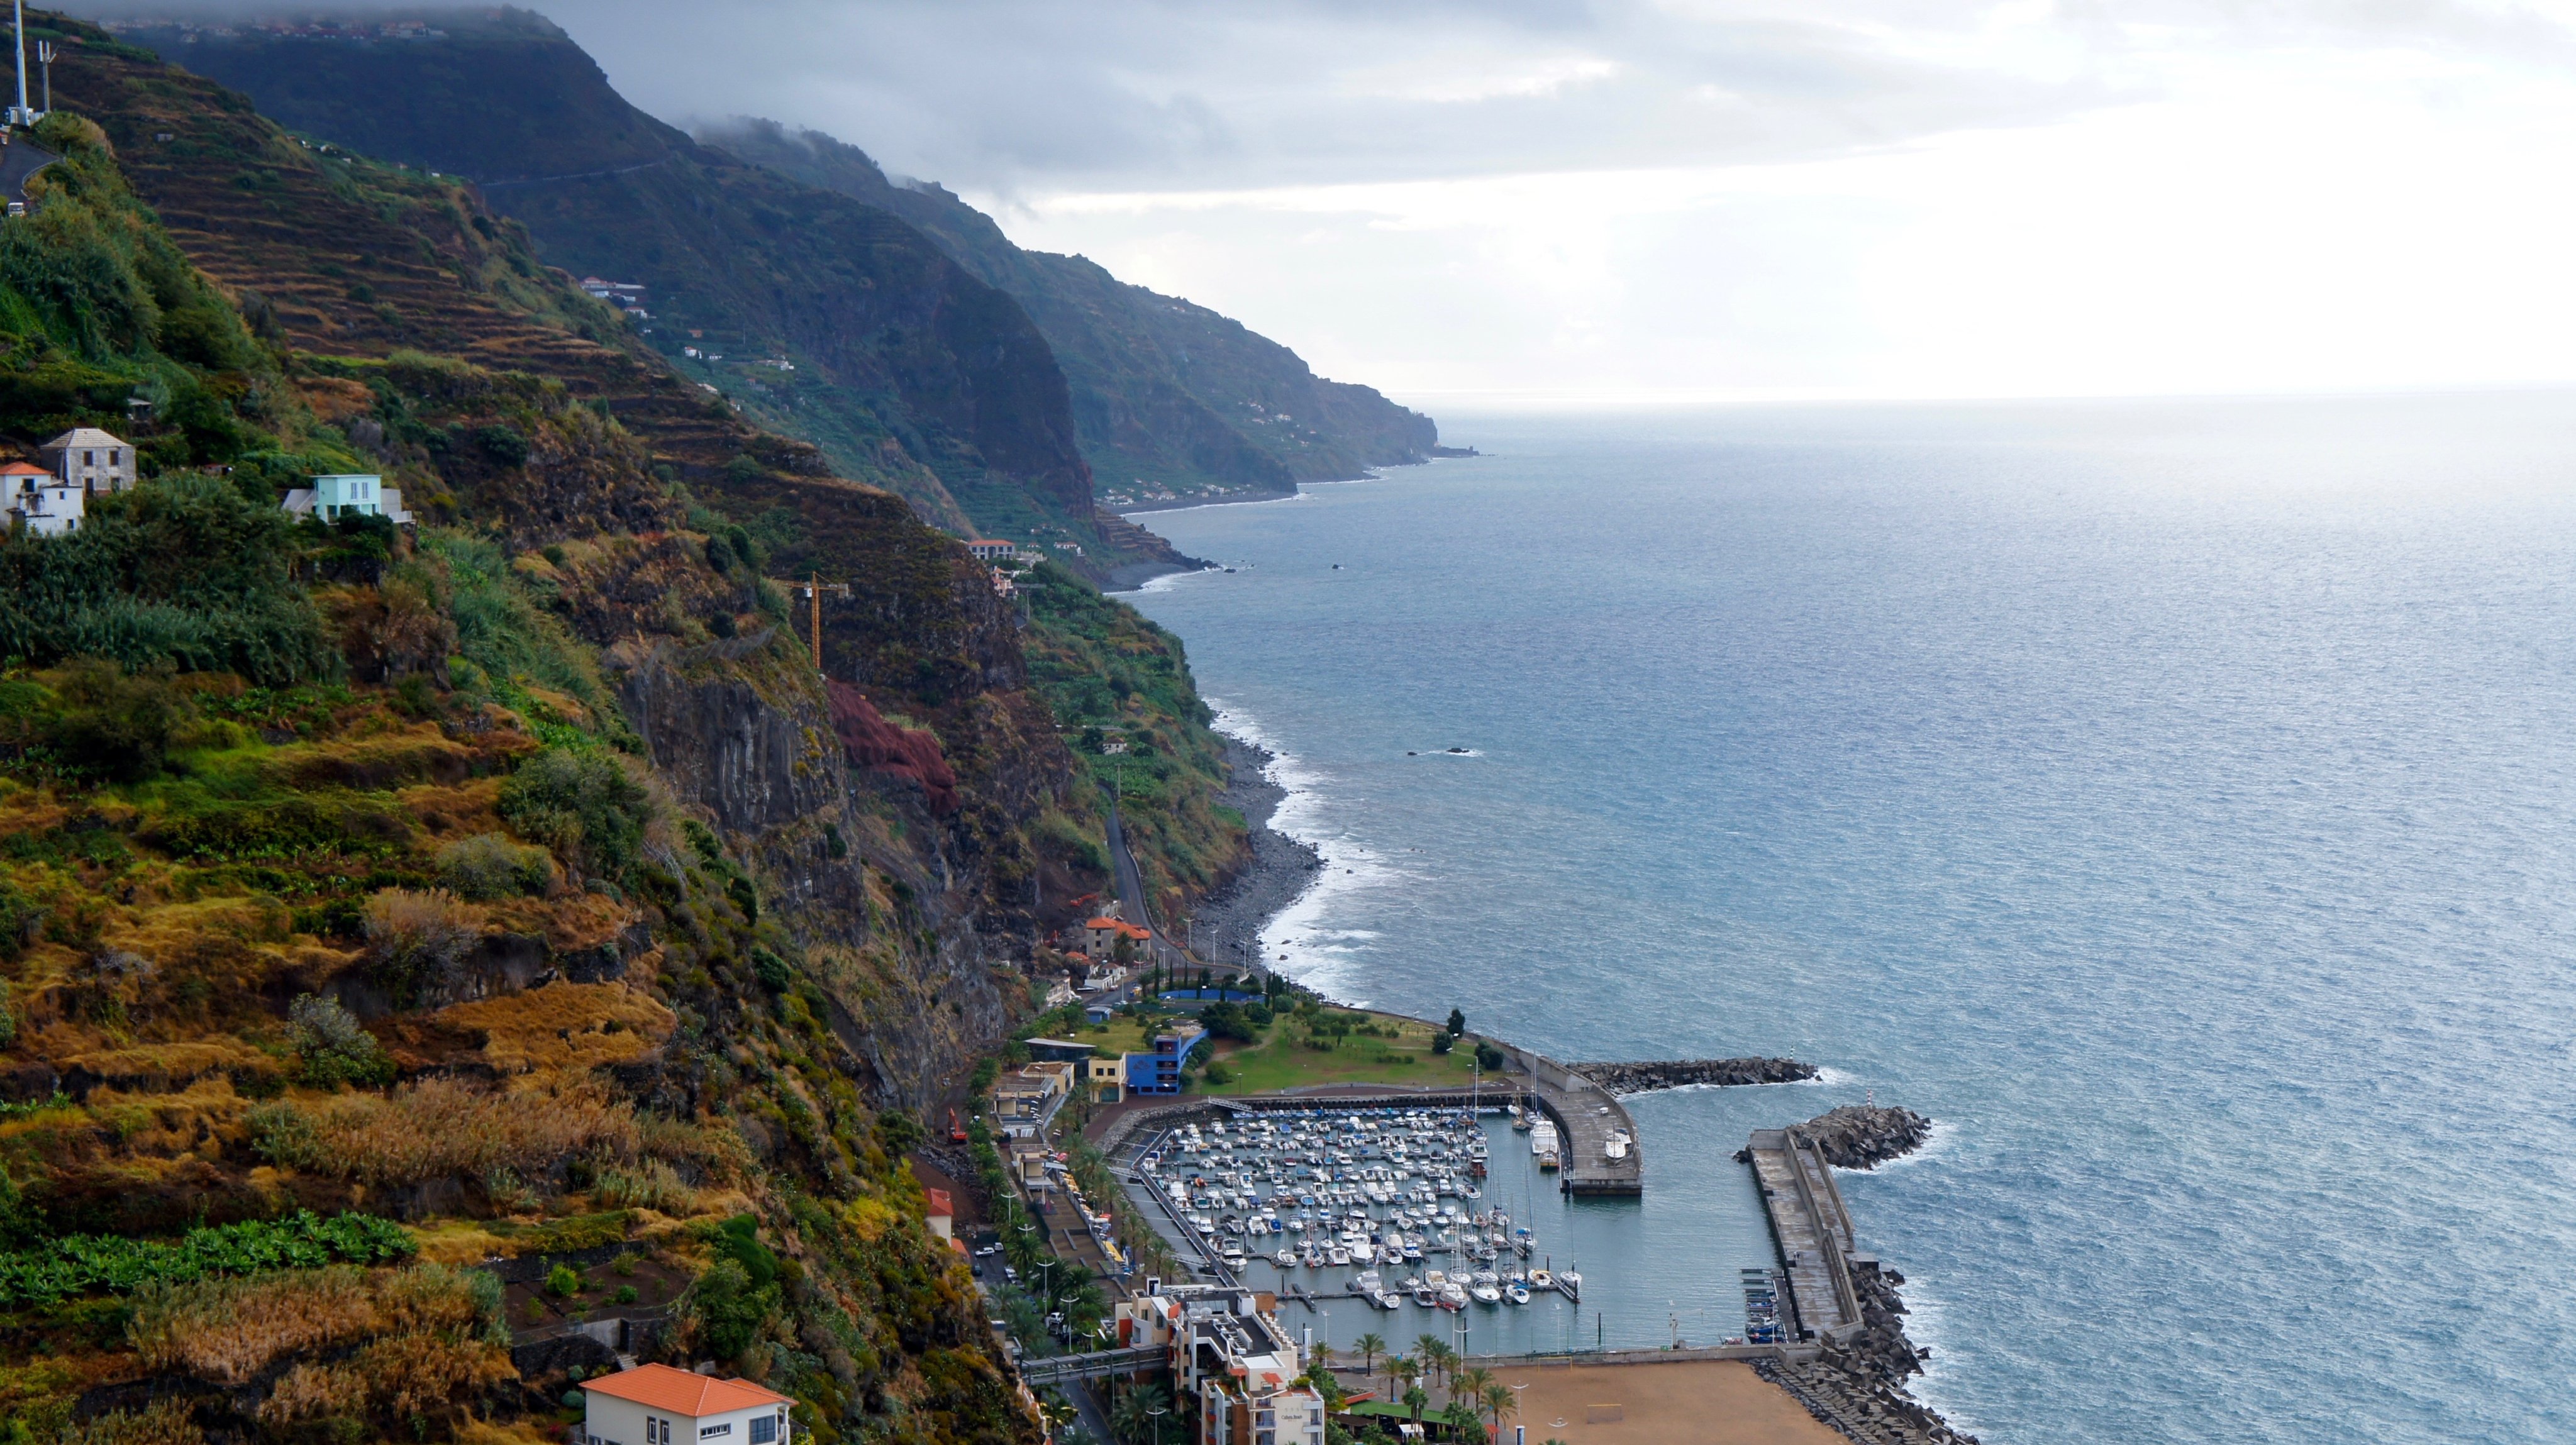 Calheta, Madeira